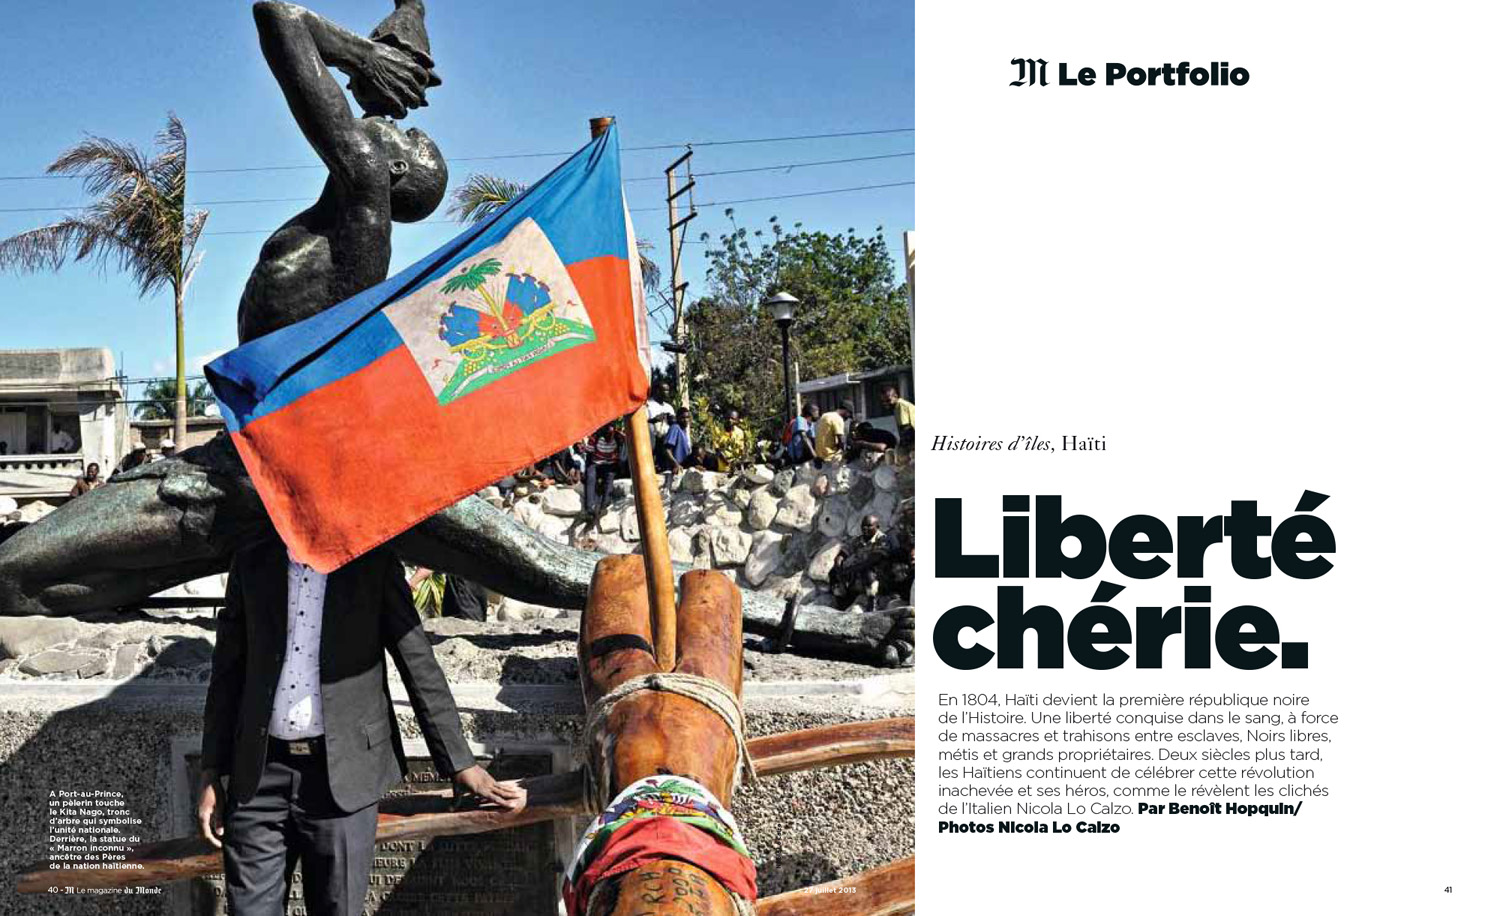 Ayiti published in Le Monde M